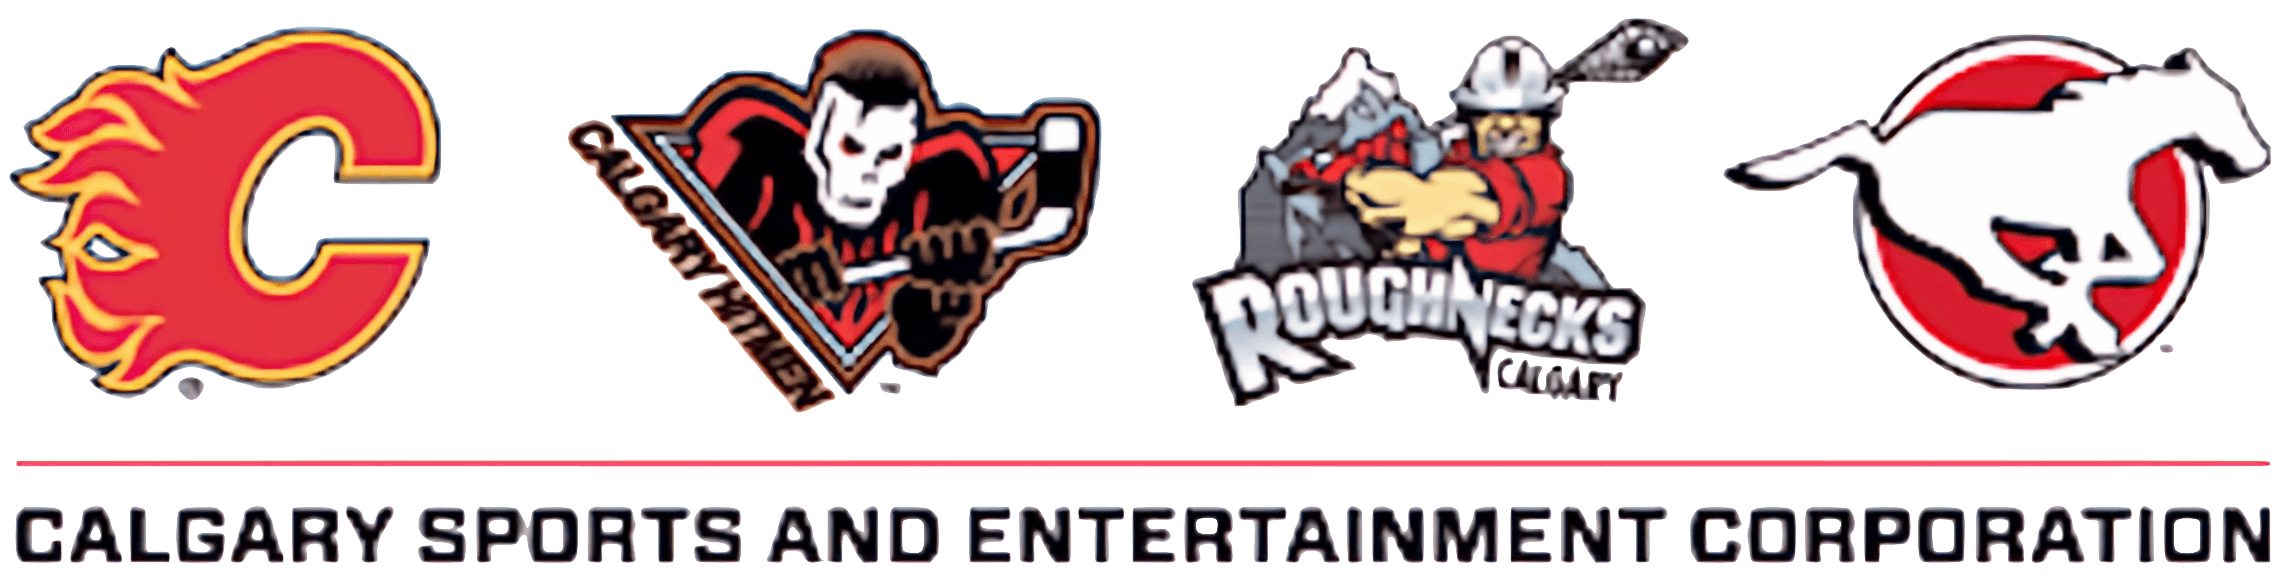 Calgary Sports and Entertainment Corporation logo